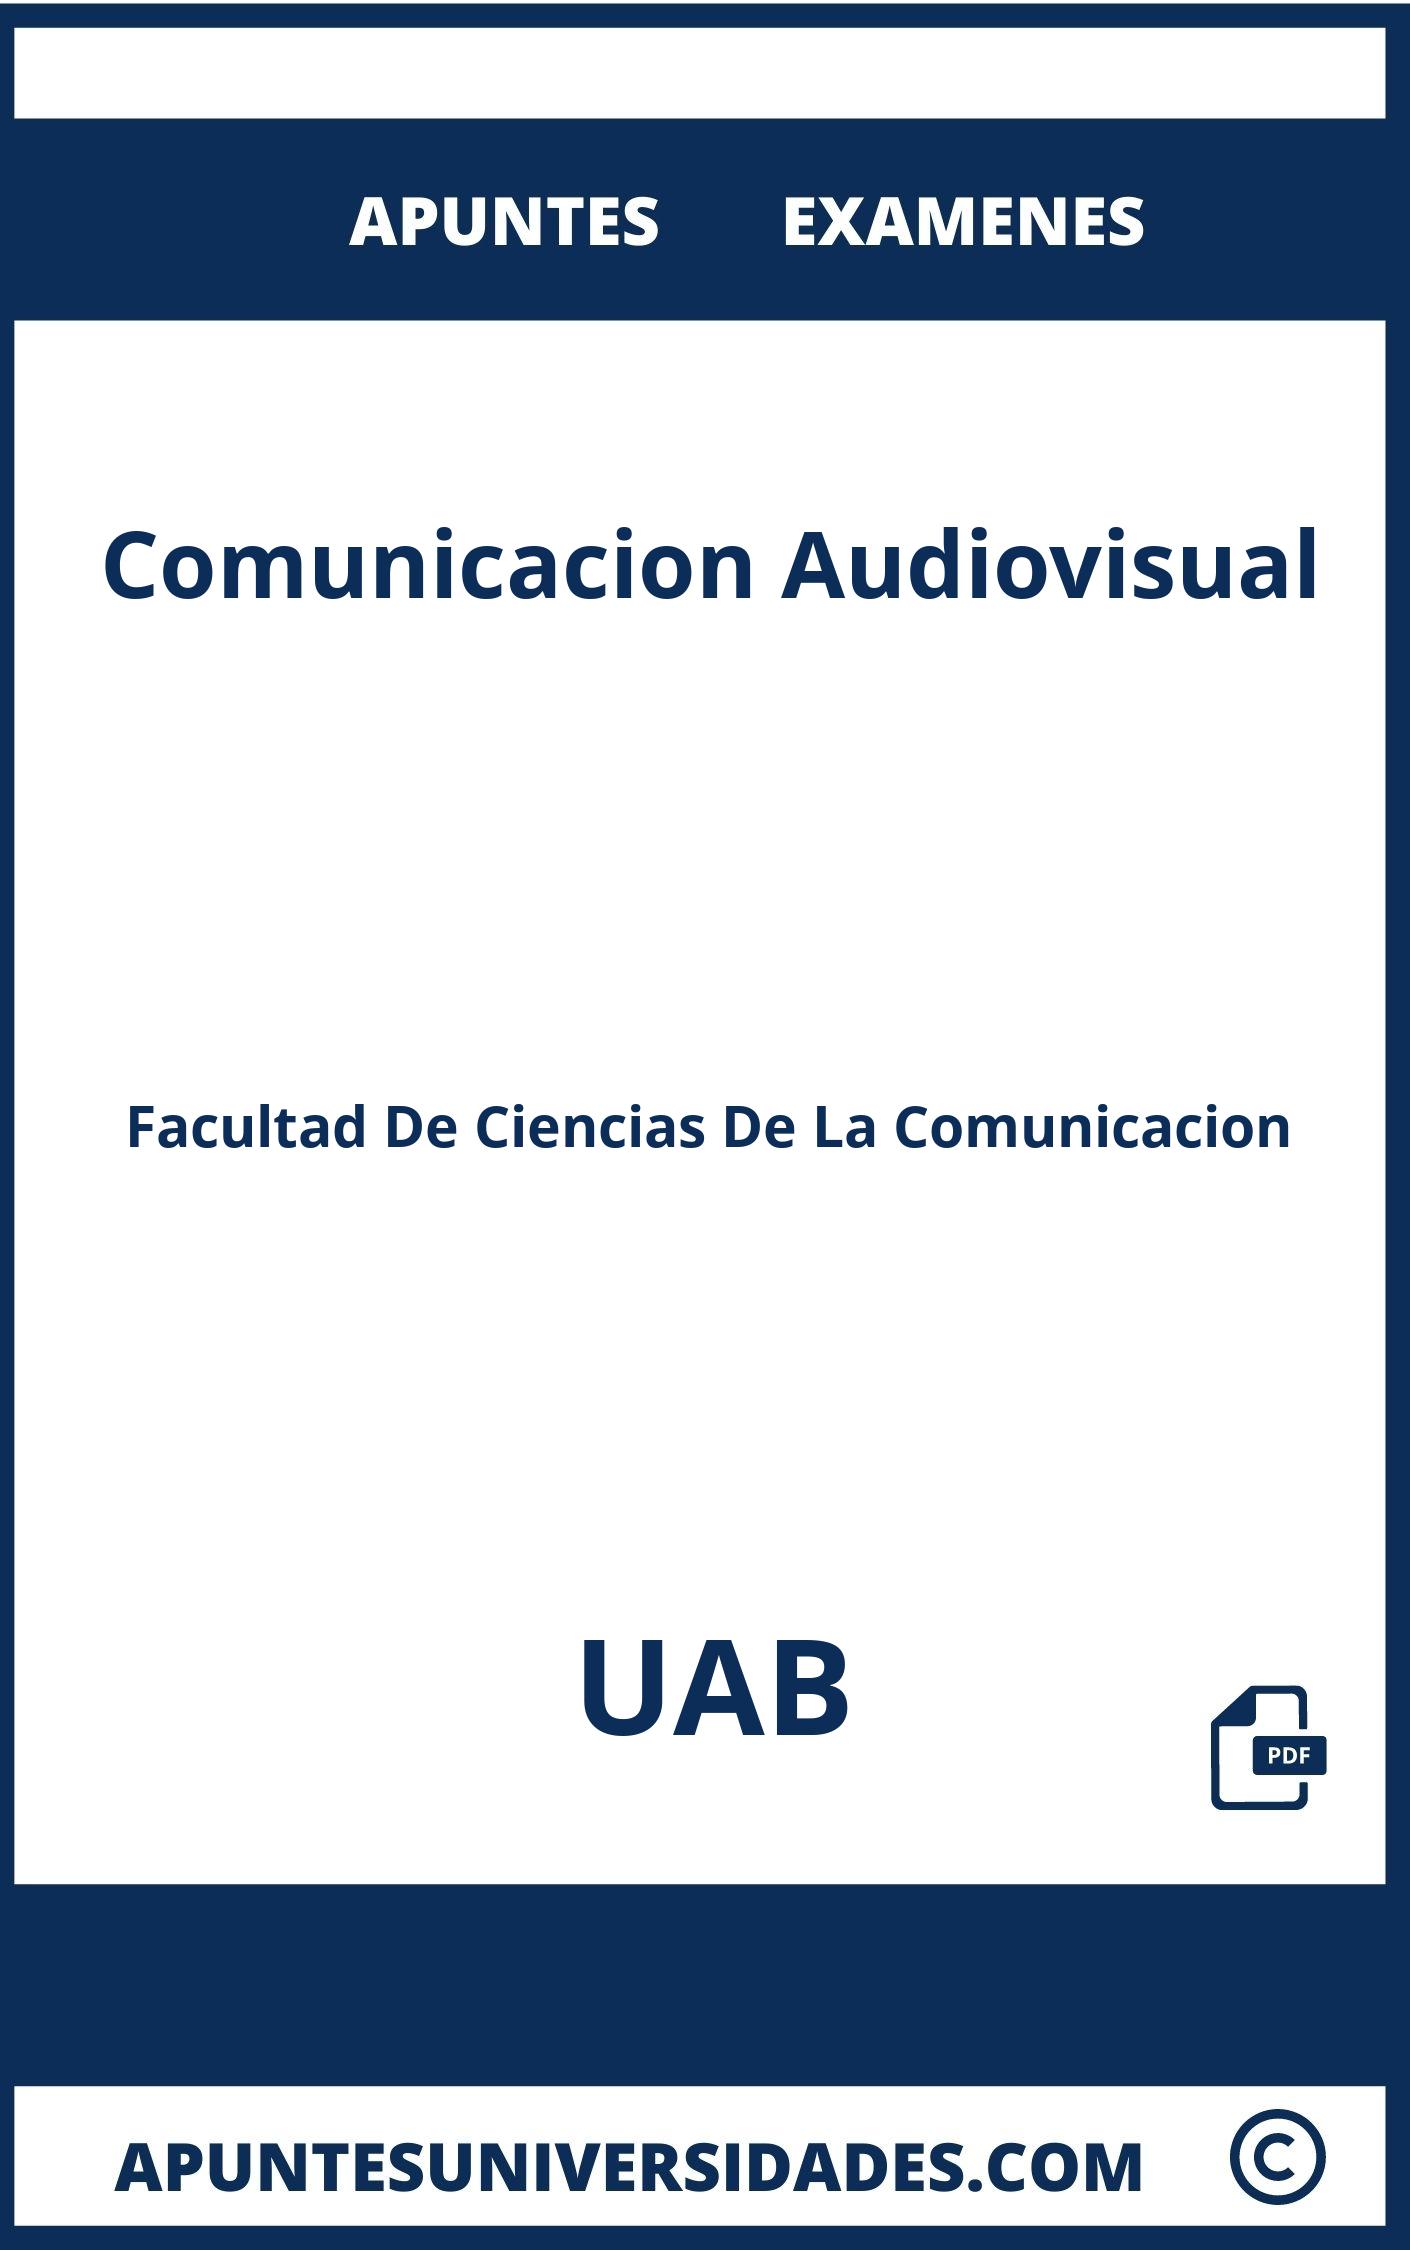 Apuntes Comunicacion Audiovisual UAB y Examenes